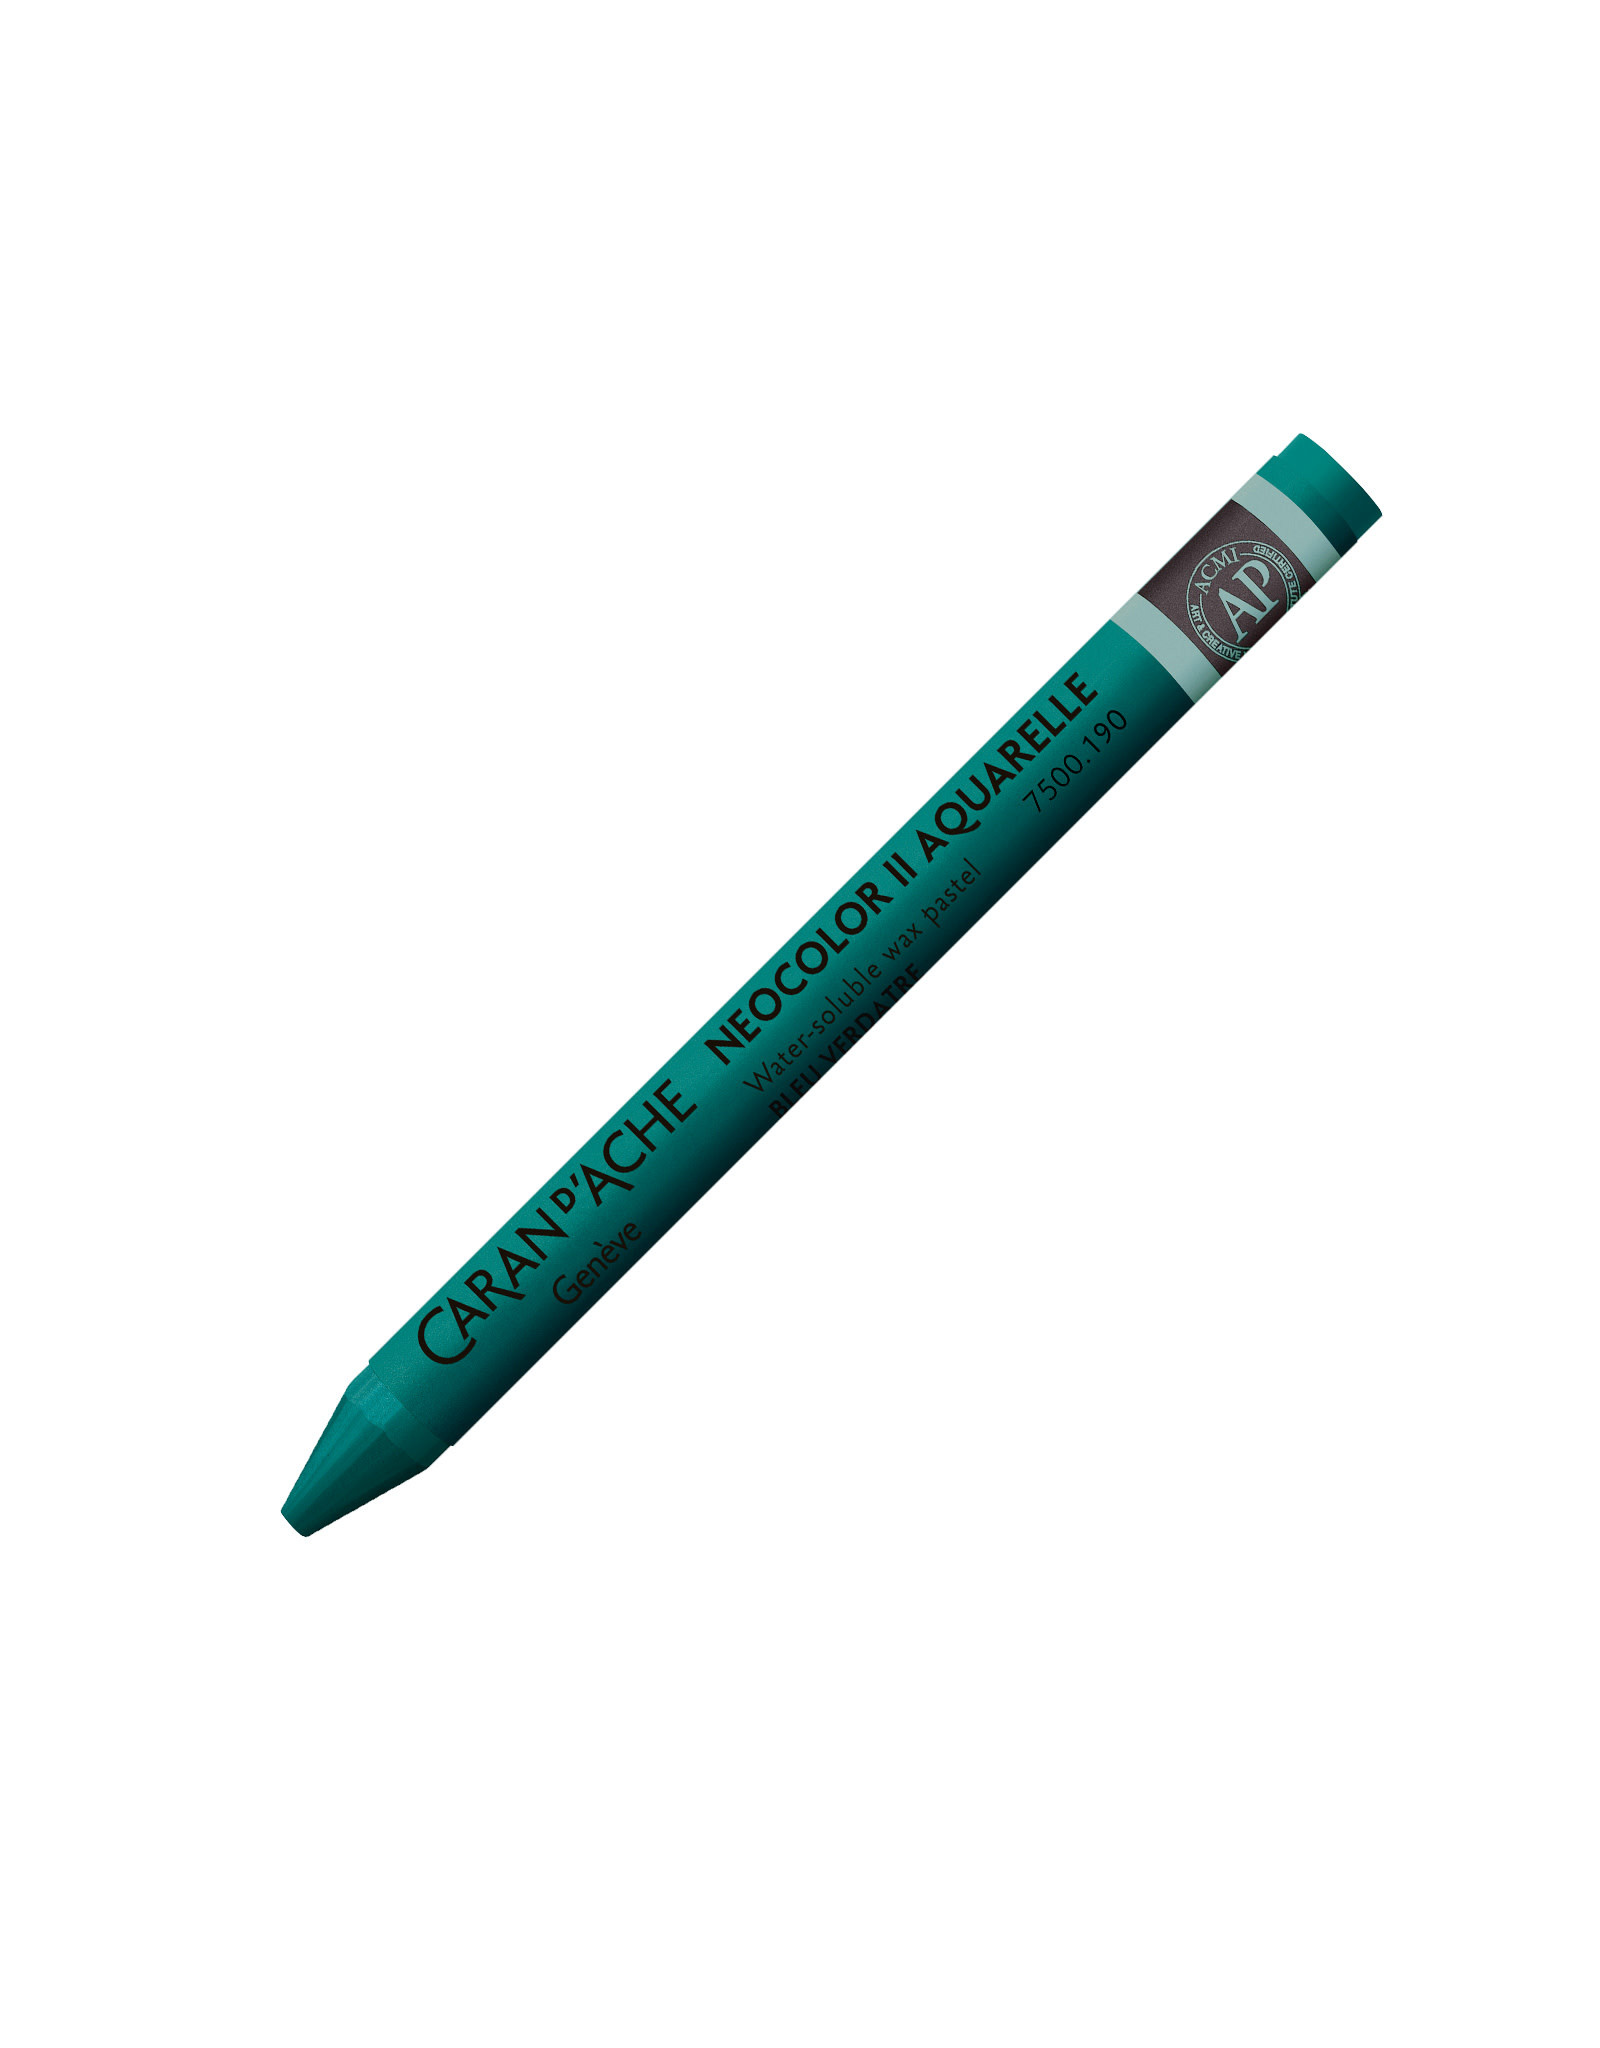 Caran d'Ache Neocolor II Crayon Greenish Blue